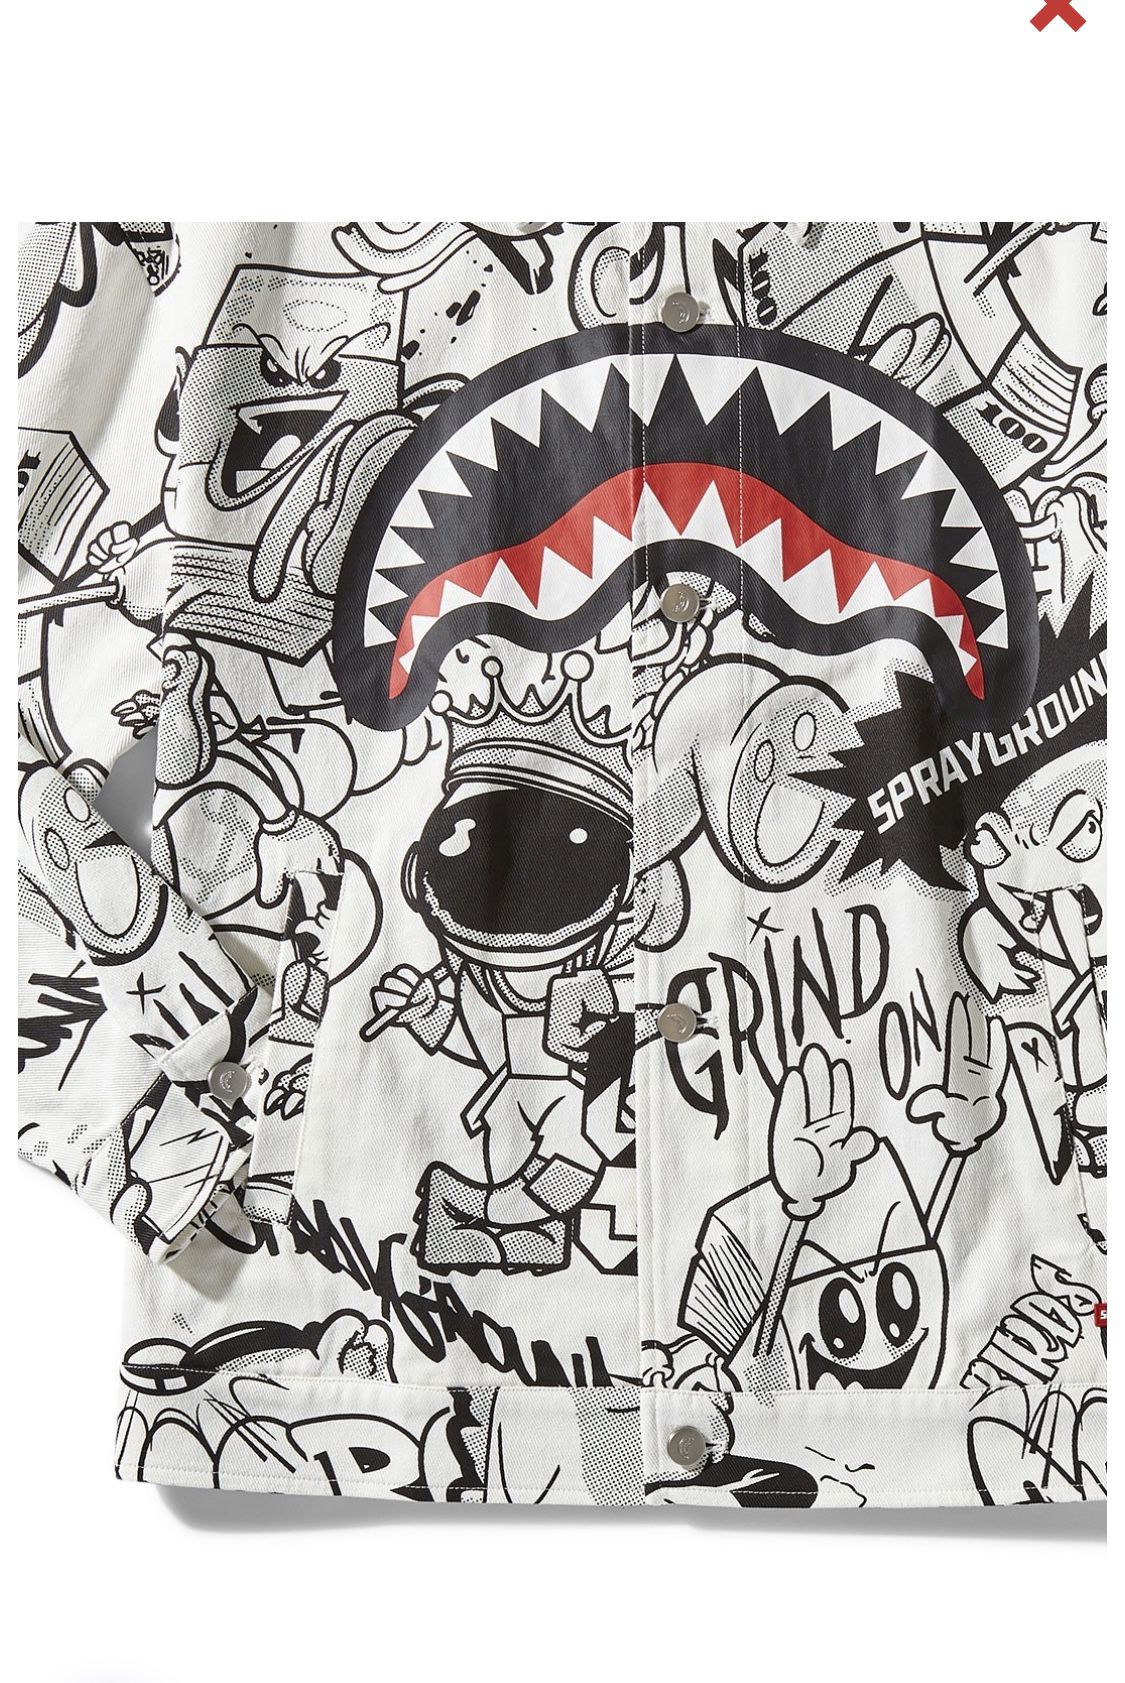 Sprayground 🔥Chaos Button Up Jacket Windbreaker Mens X-Large or Large Graffiti Cartoon Black White 